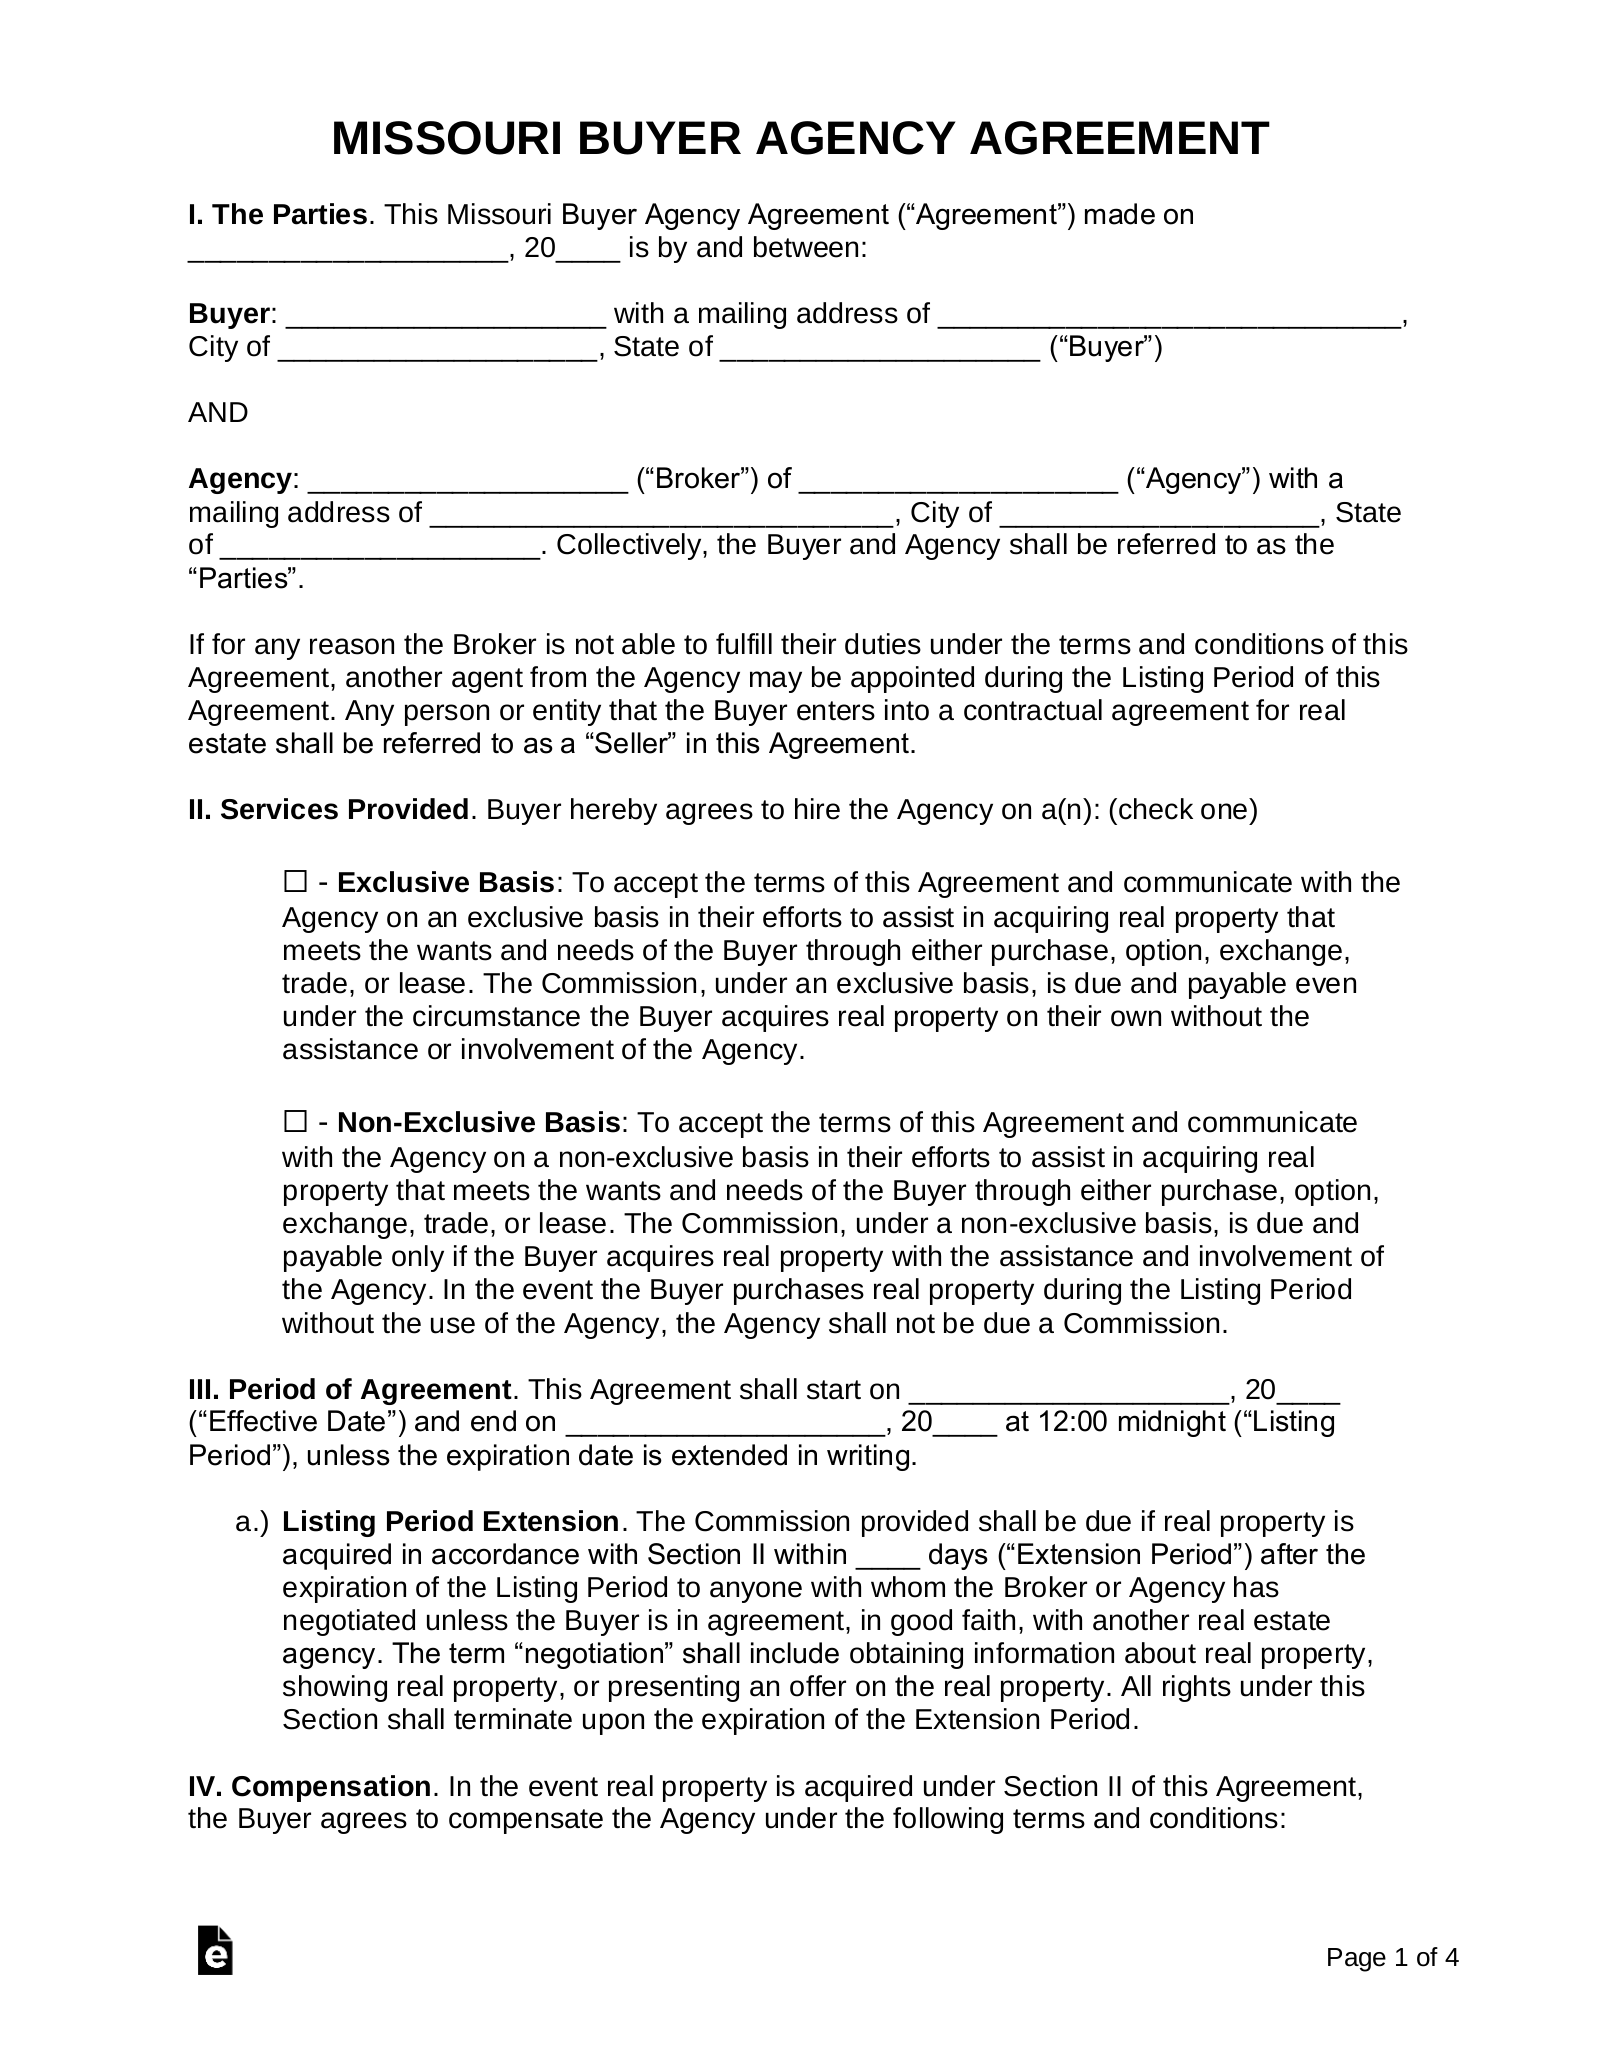 Missouri Buyer Agency Agreement